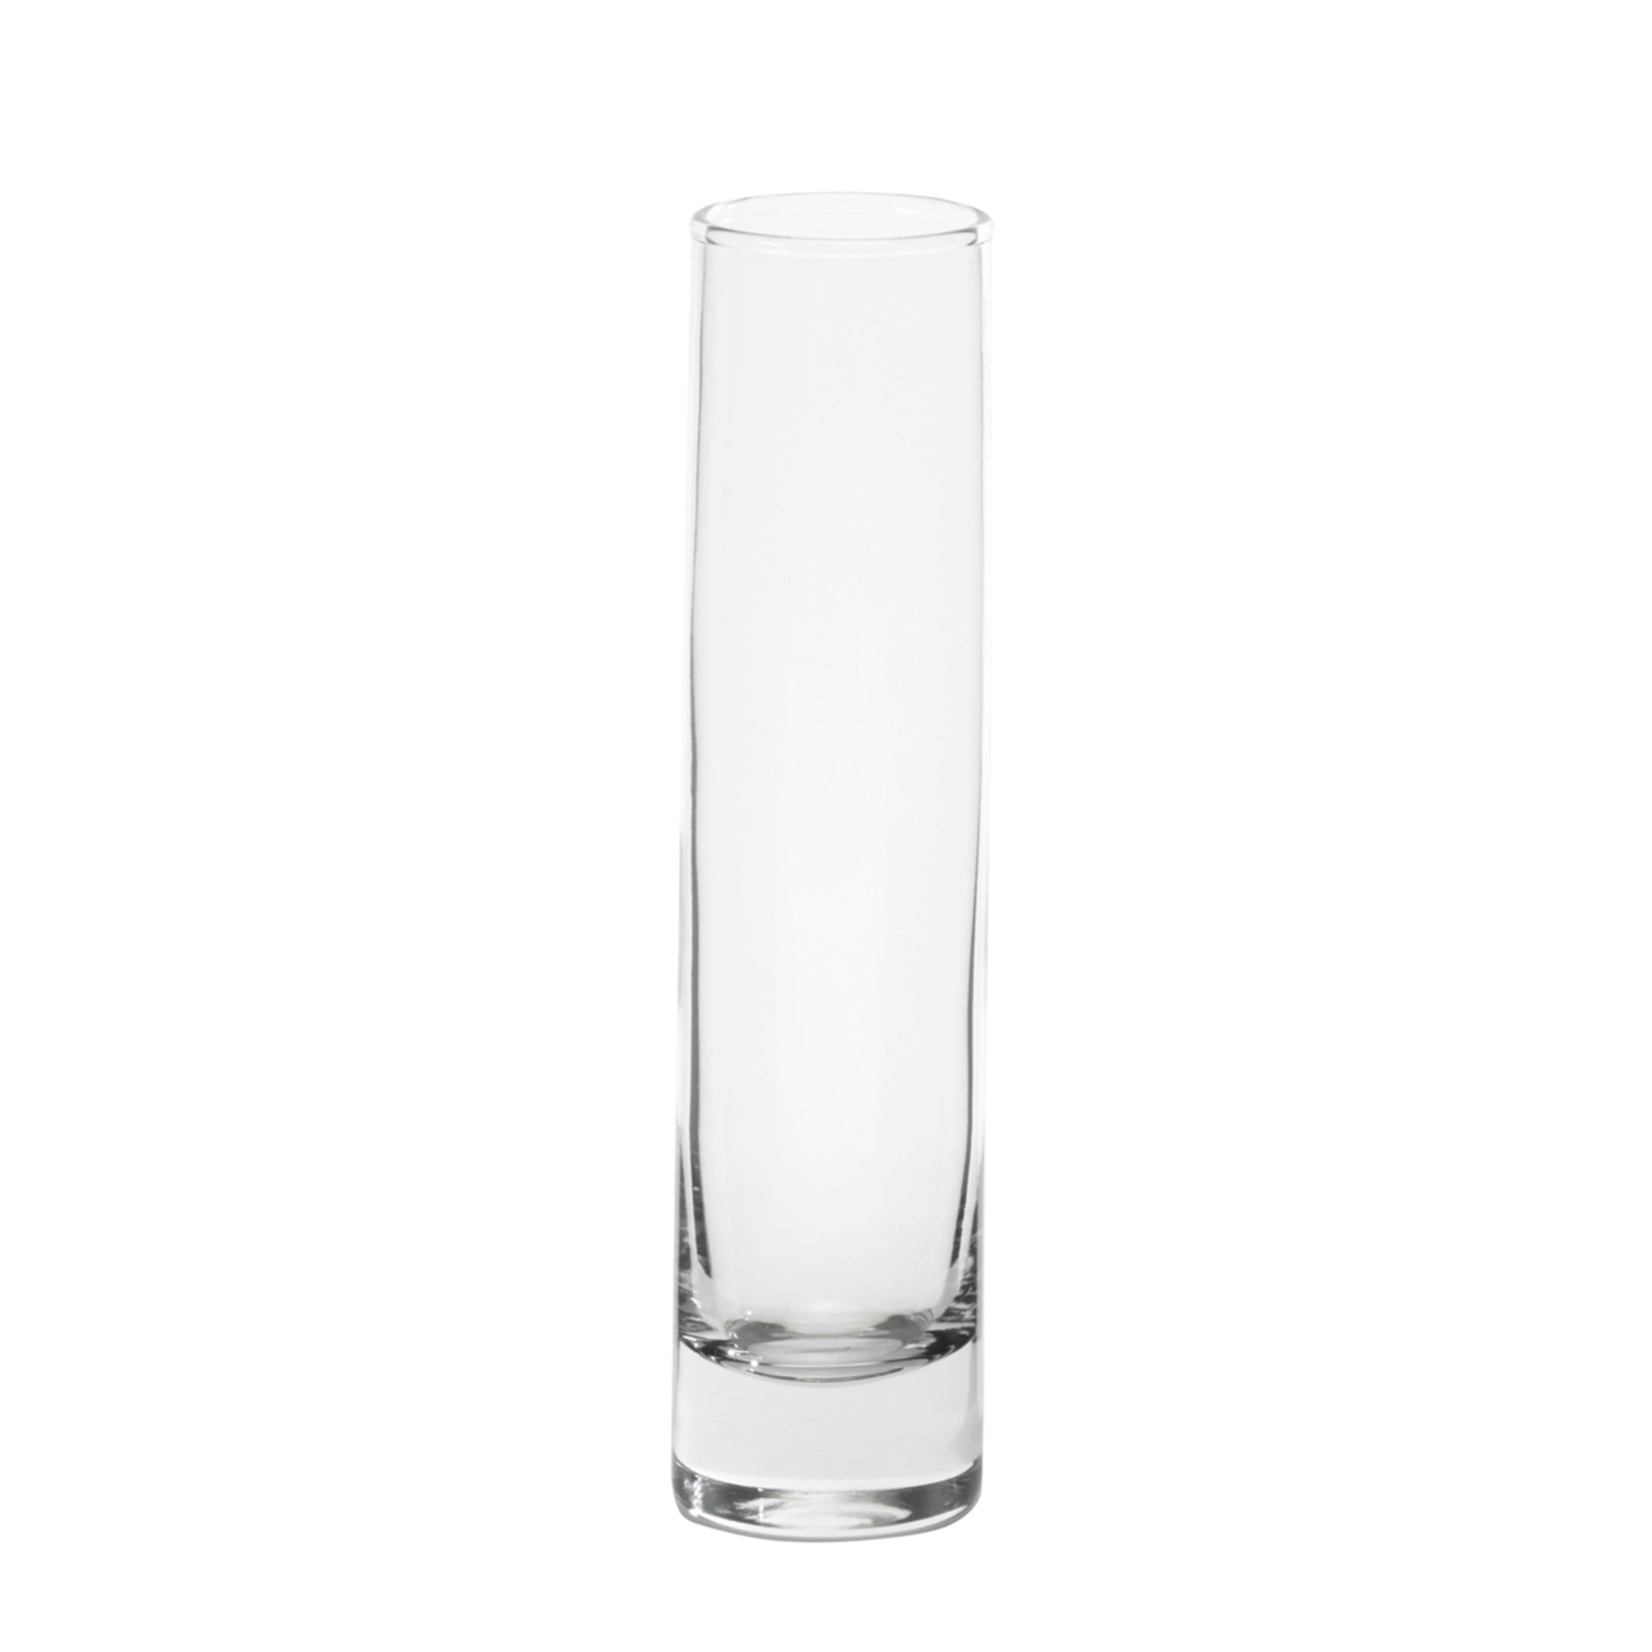 7 ½”H X 1 7/8” CLEAR GLASS BUD VASE